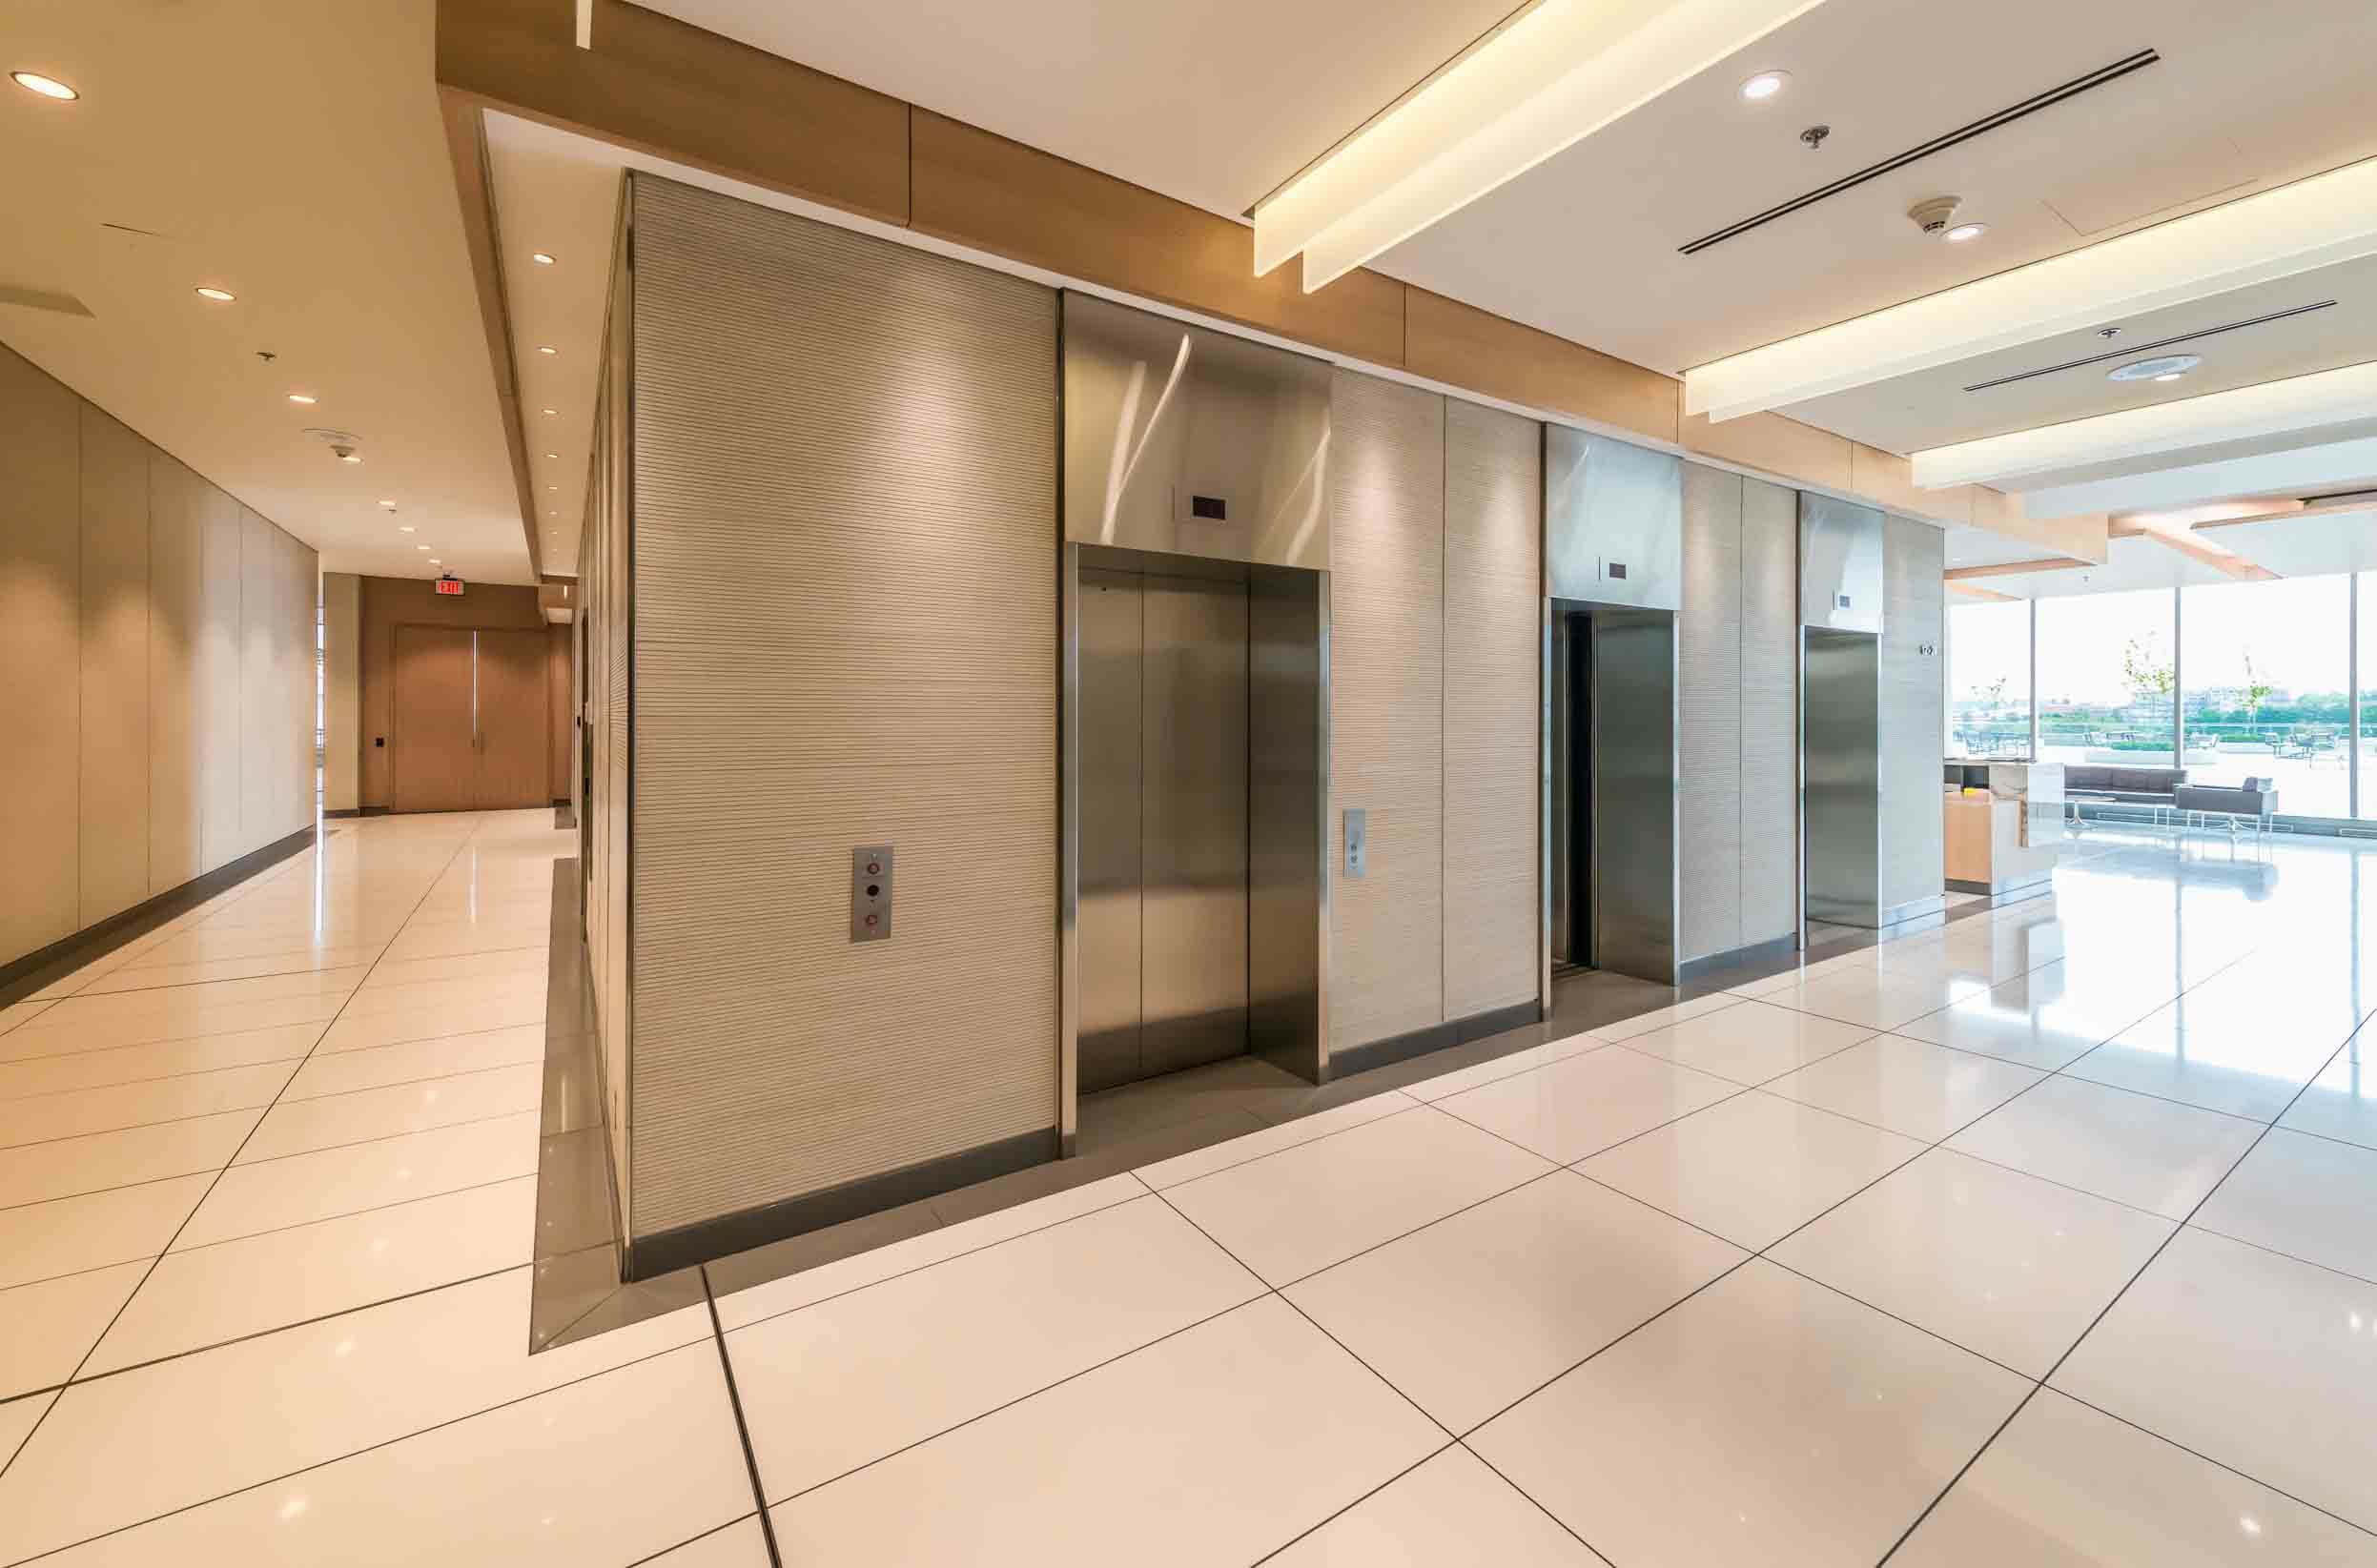 Elevators,In,The,Modern,Lobby,,Hallway,Of,The,Luxury,Hotel,